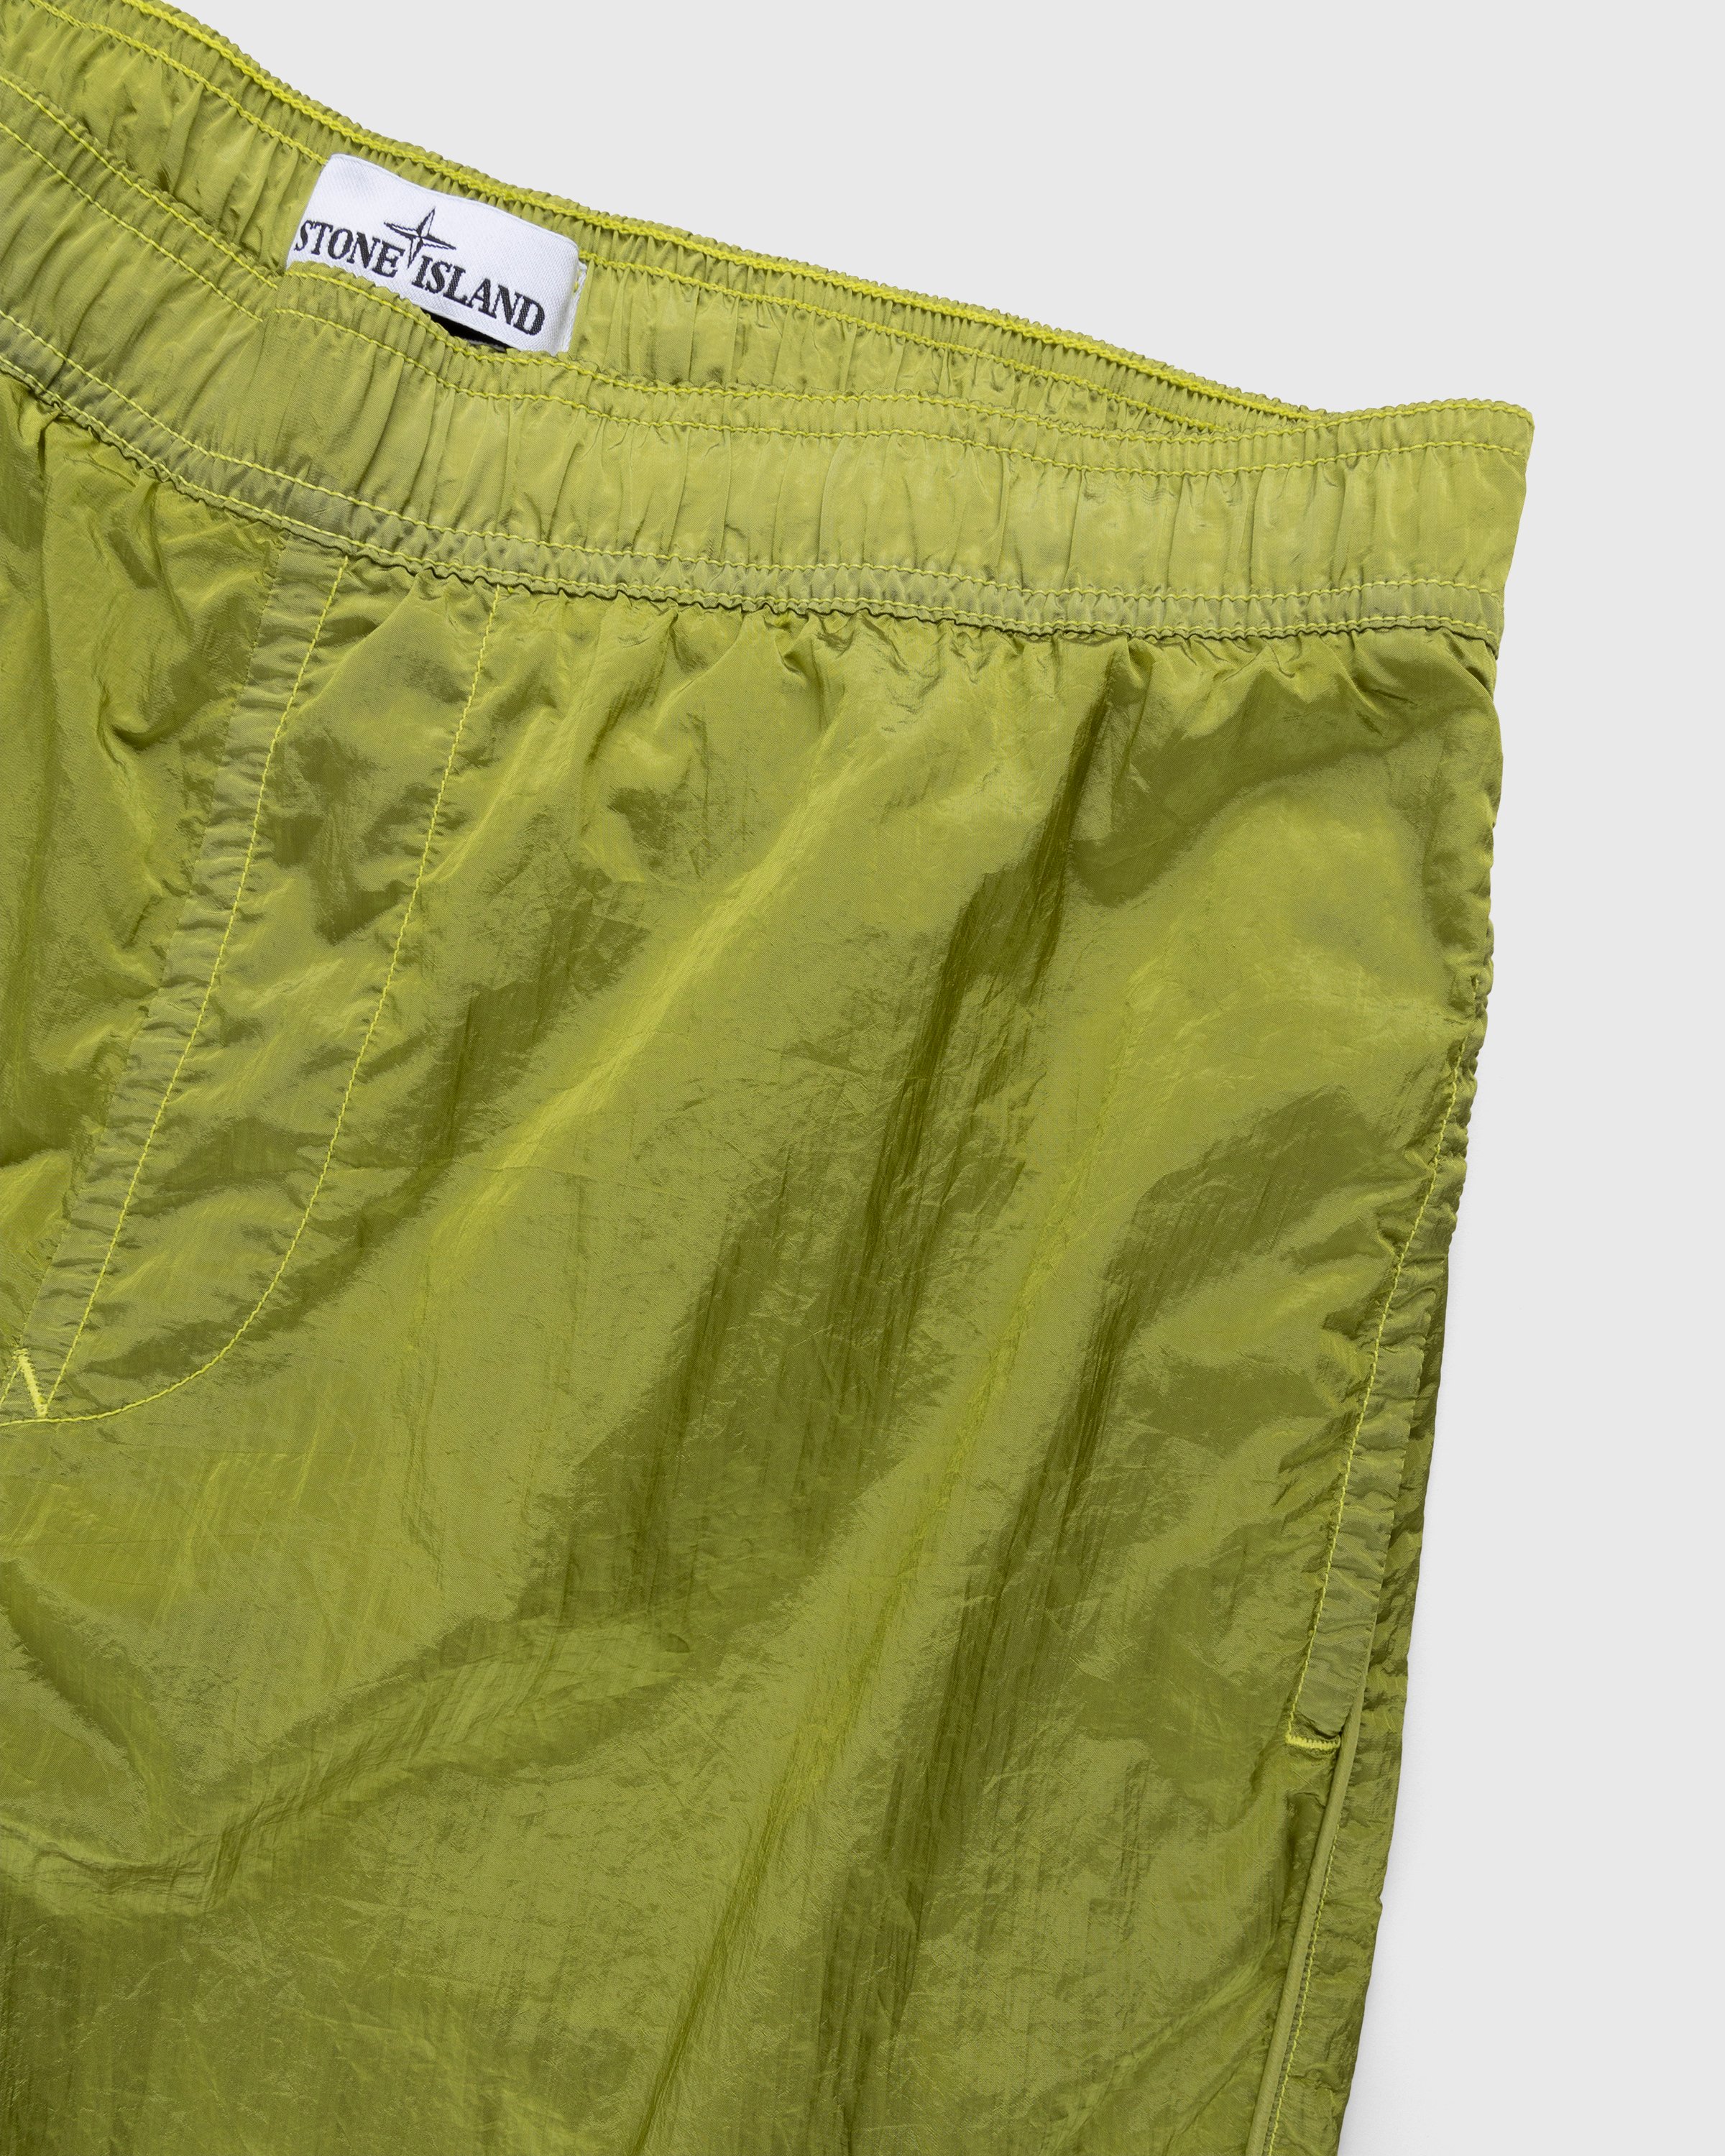 Stone Island - B0243 Nylon Metal Swim Shorts Lemon - Clothing - Yellow - Image 3